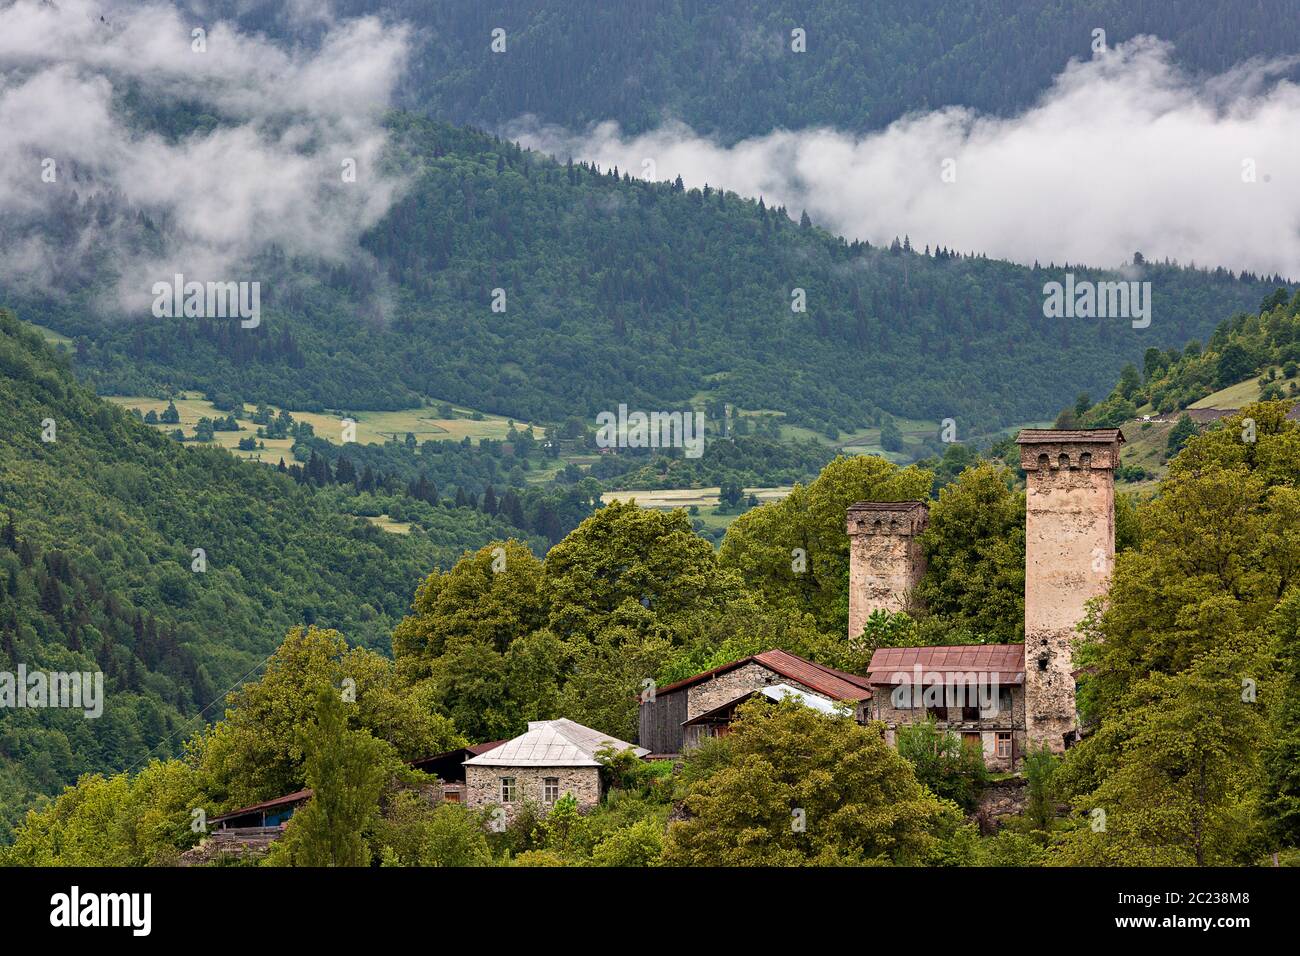 Village houses with towers in Svaneti region, Caucasus Mountains, Georgia Stock Photo